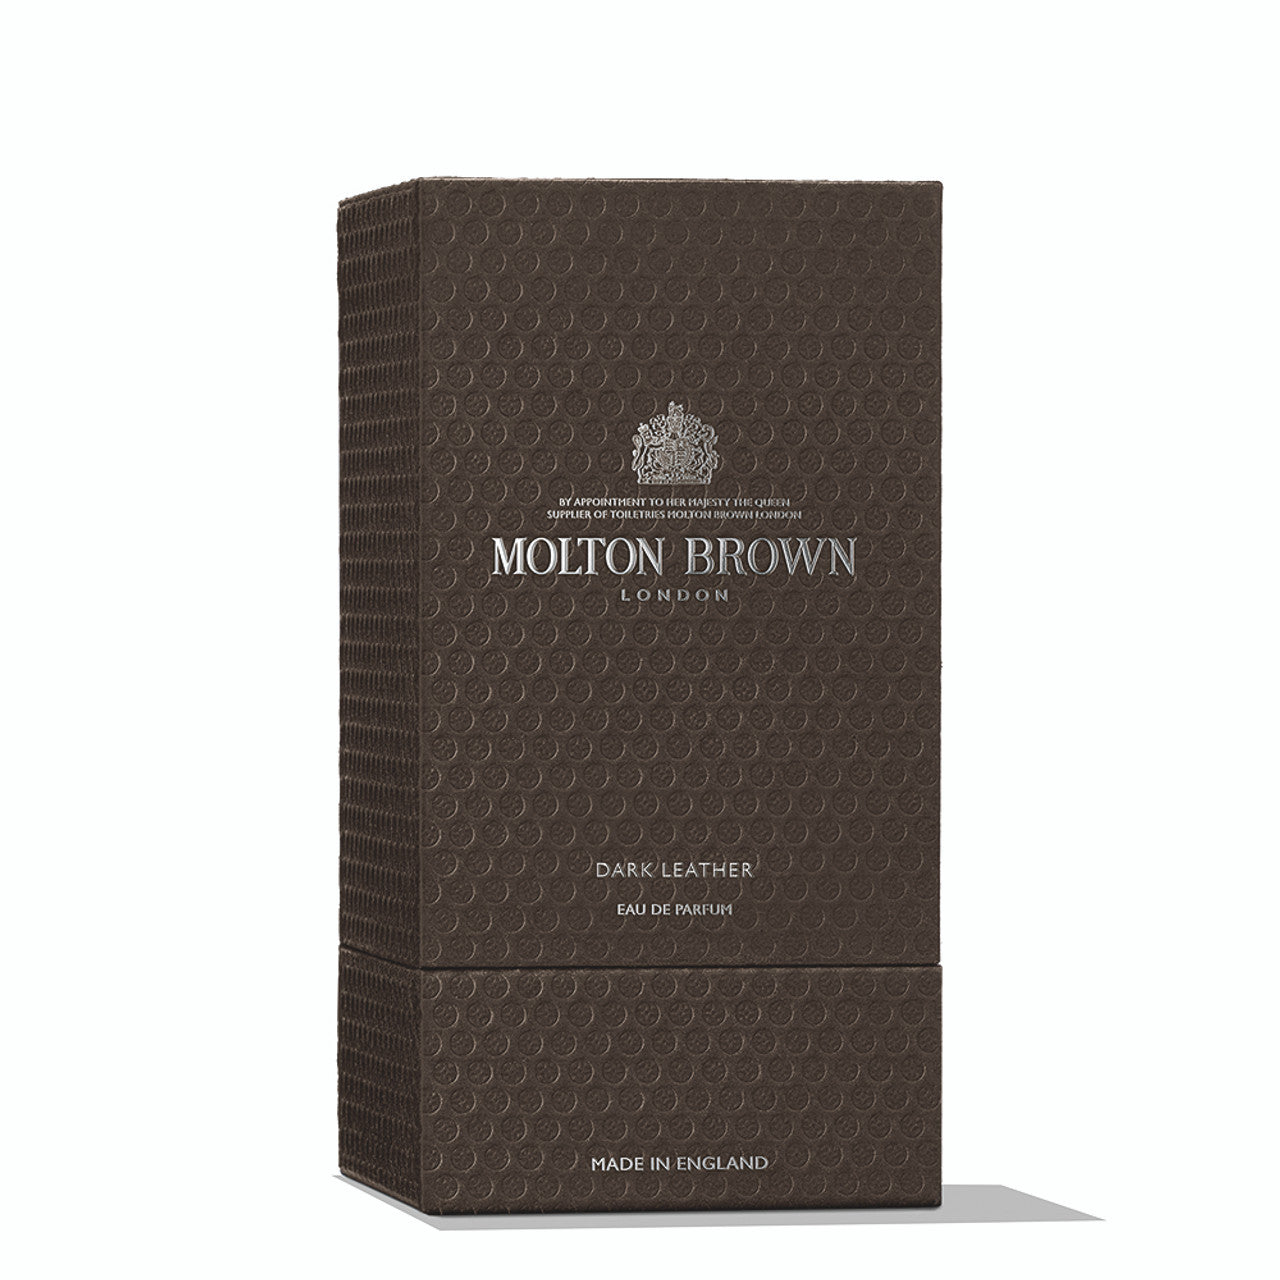 Dark Leather - Eau de Parfume - Molton Brown